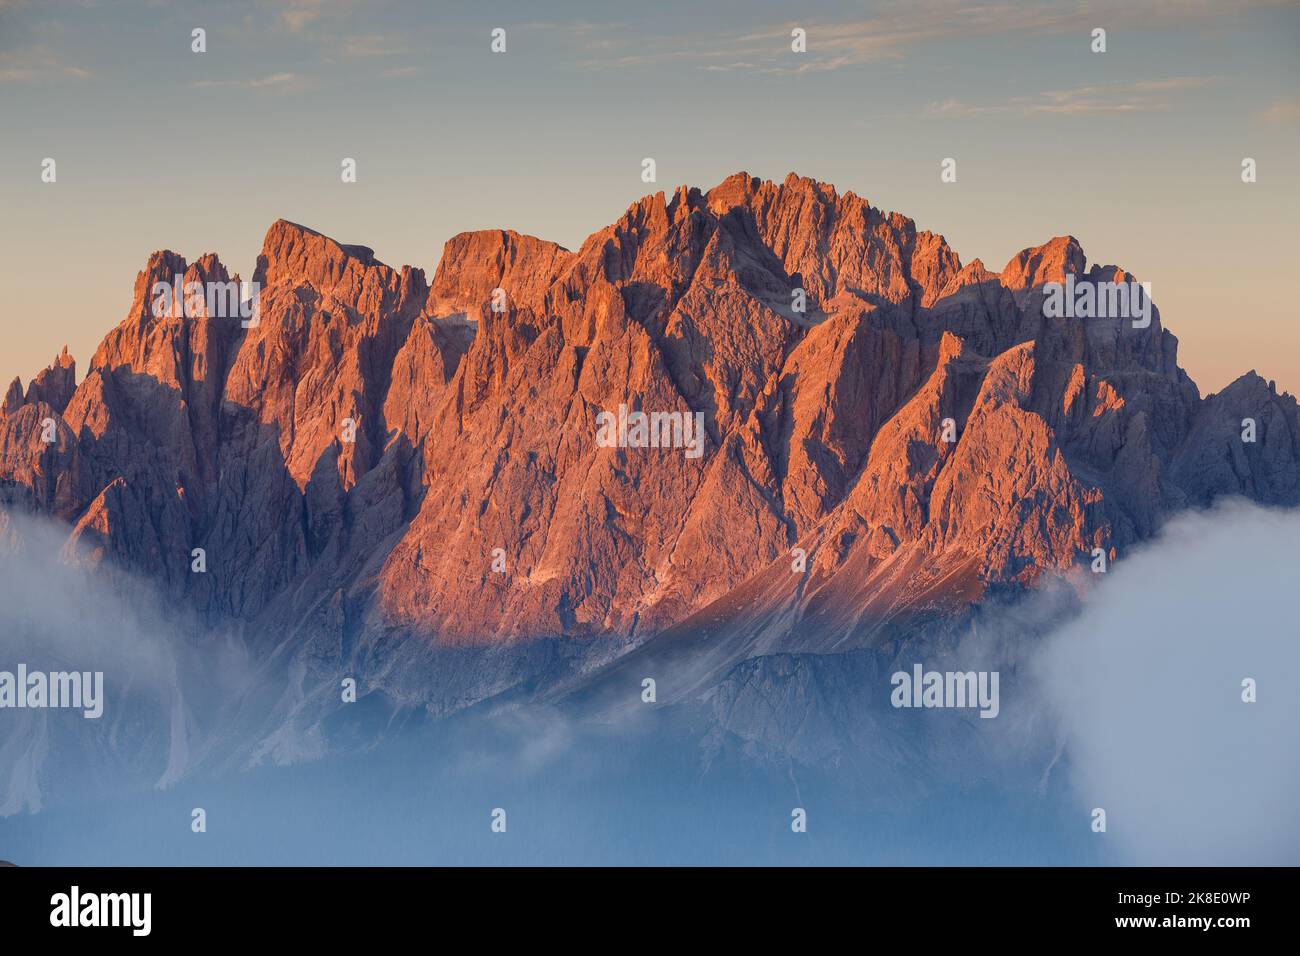 Monte Popèra, Croda Rossa di Sesto, Cima Undici, Croda dei Toni picos. Las Dolomitas Sexten. Alpes italianos. Europa. Foto de stock